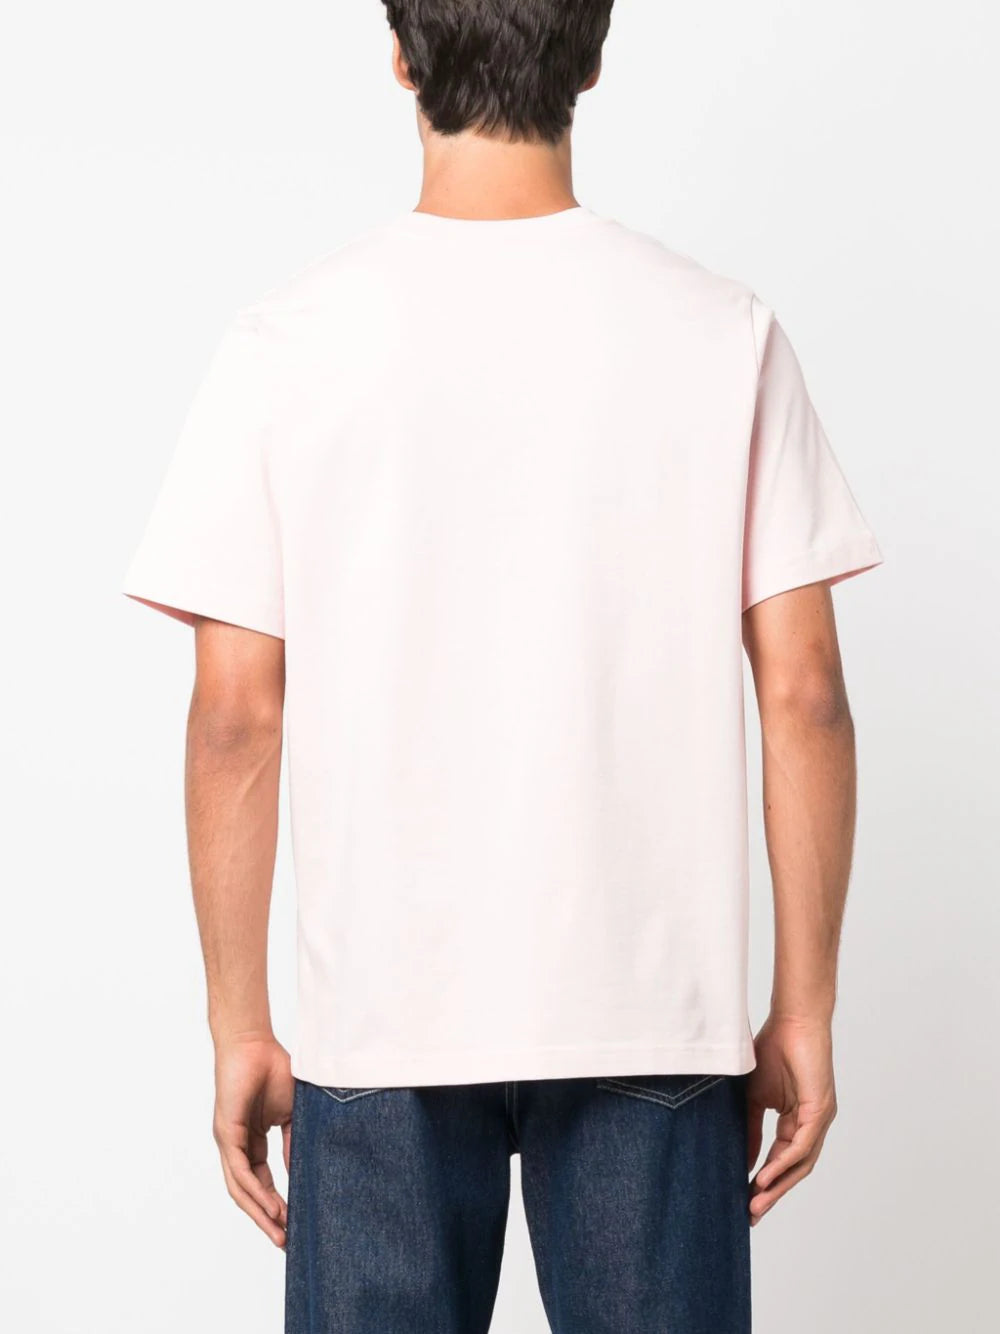 Casablanca Graphic-print Tennis Club Cotton T-shirt Pink